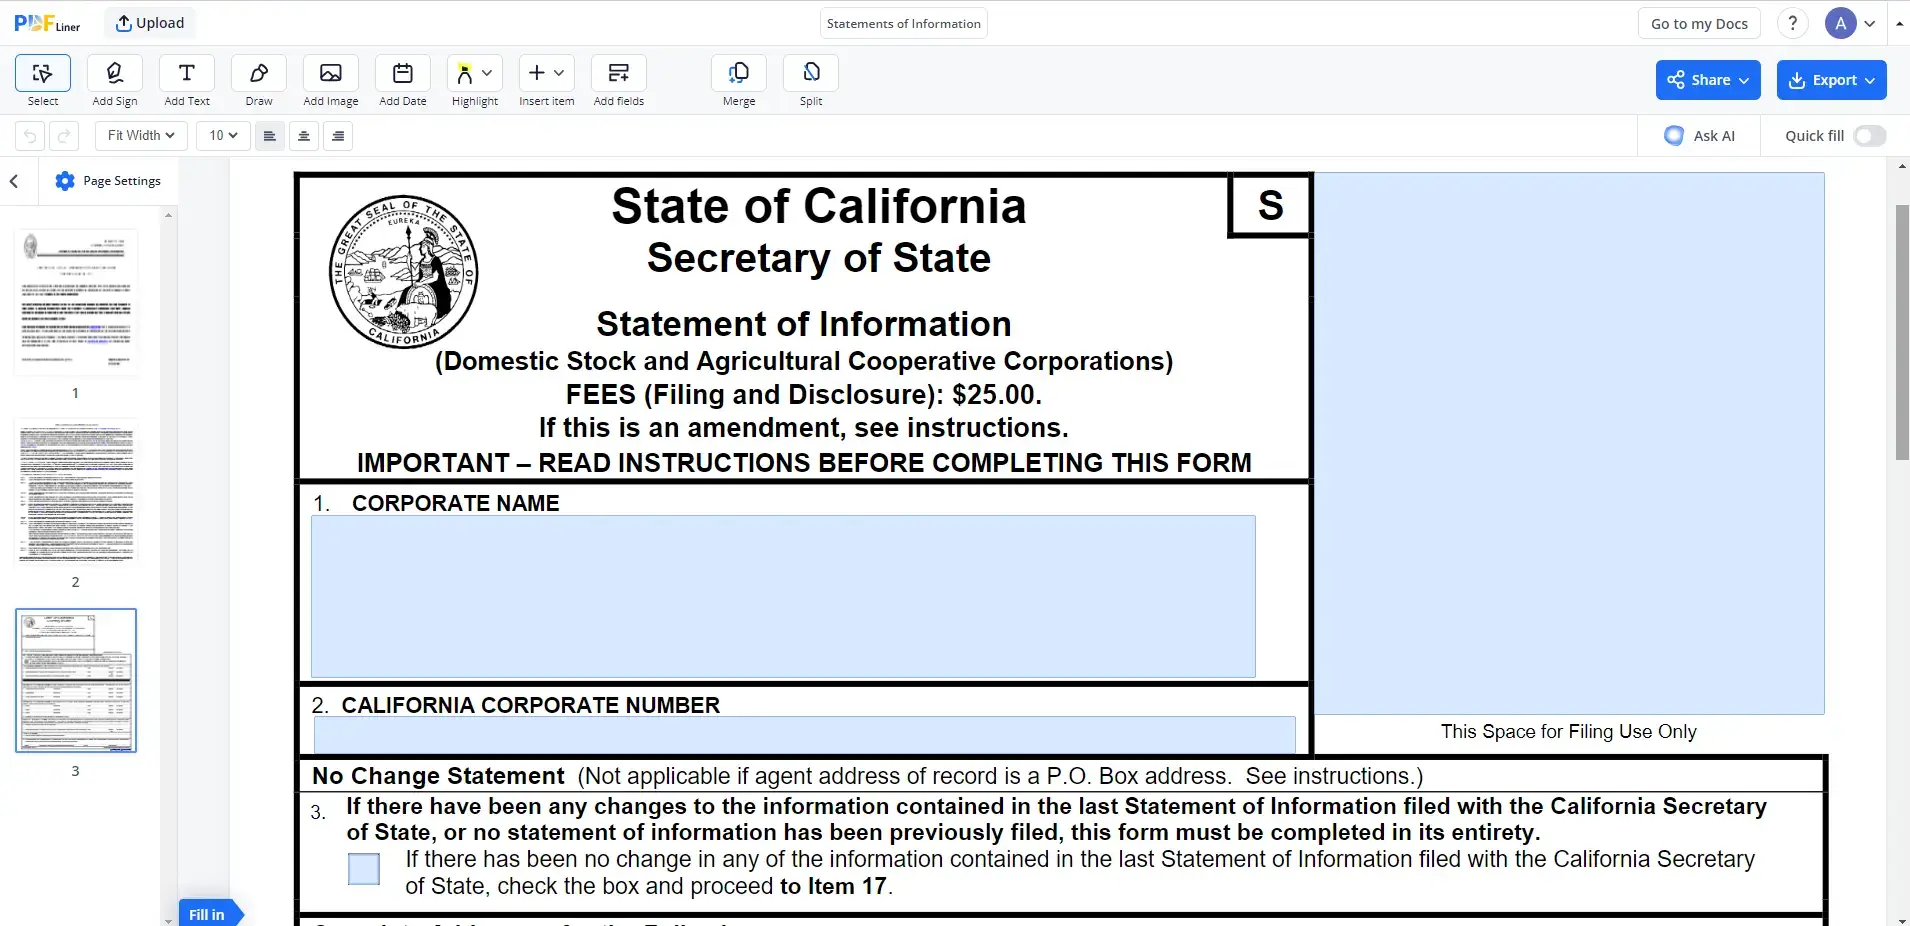 statements of information screenshot